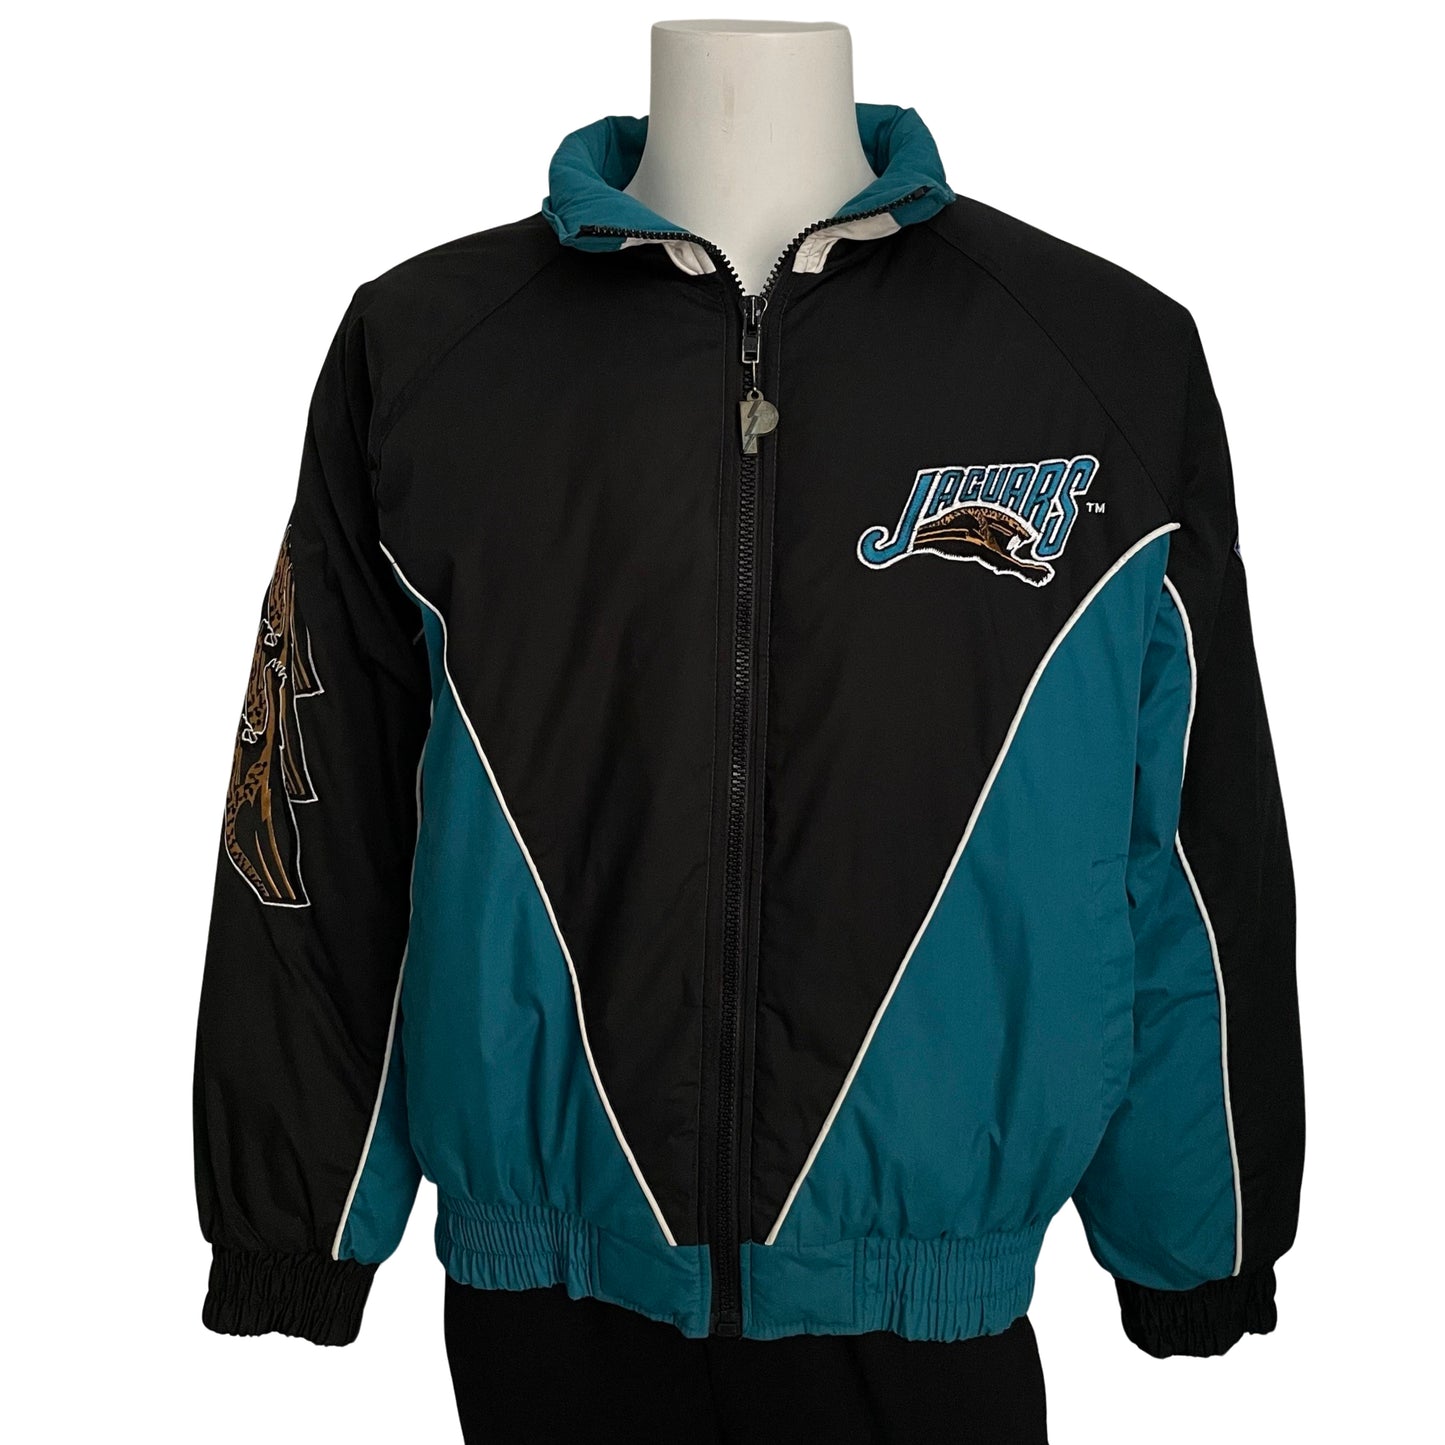 Vintage Jacksonville Jaguars banned logo PRO PLAYER by Daniel Young jacket size LARGE